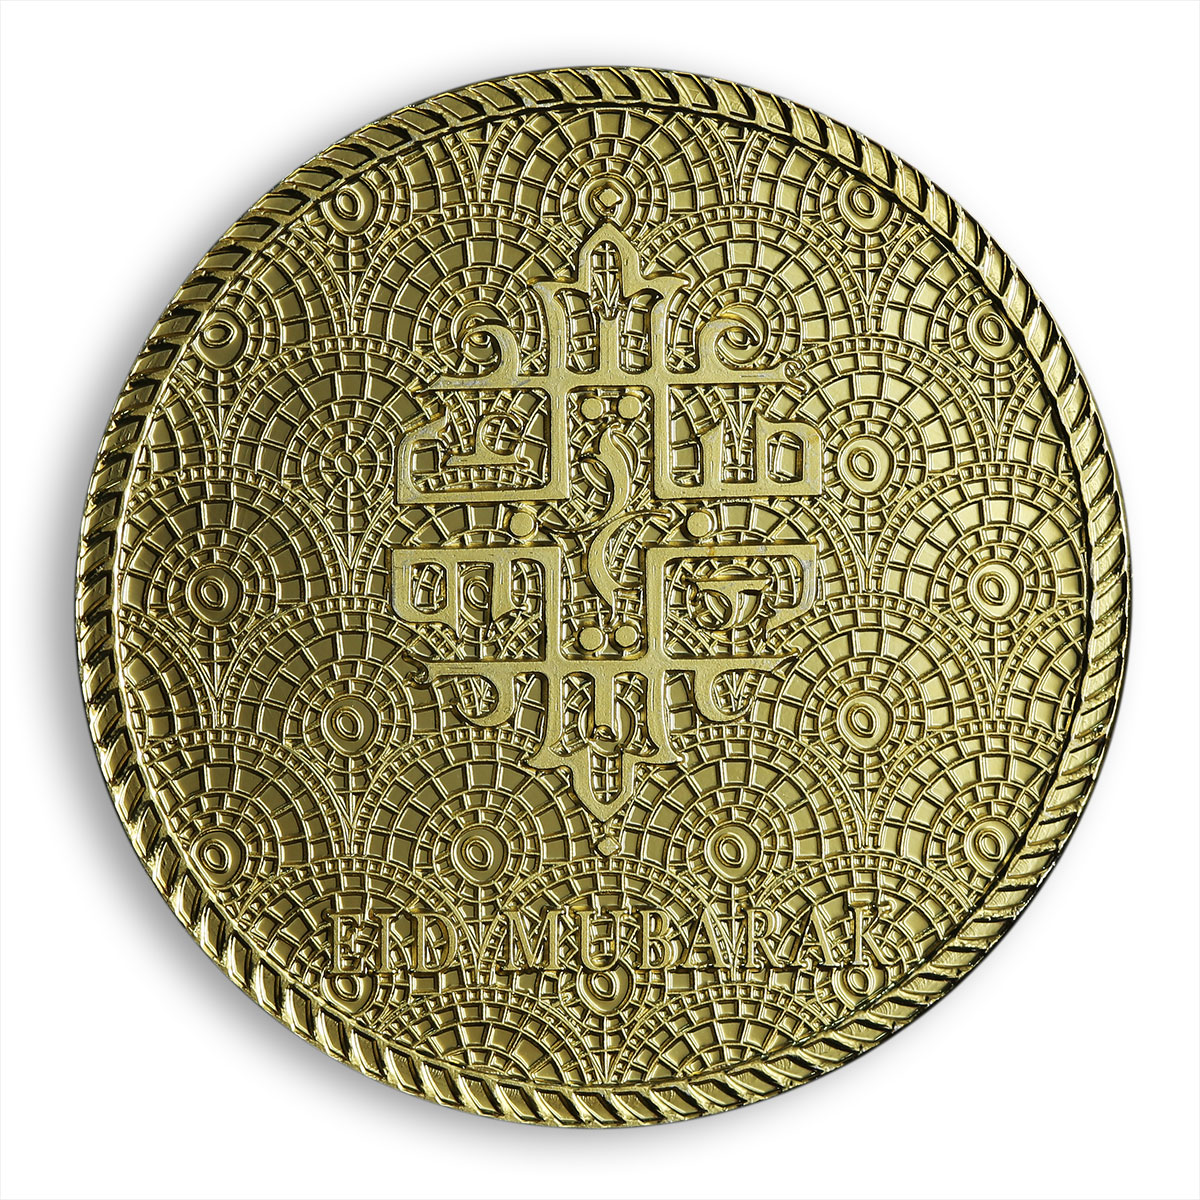 Eid Mubarak, Muslim greeting, Eid ul-Adha, gold plated token coin souvenir 40 mm